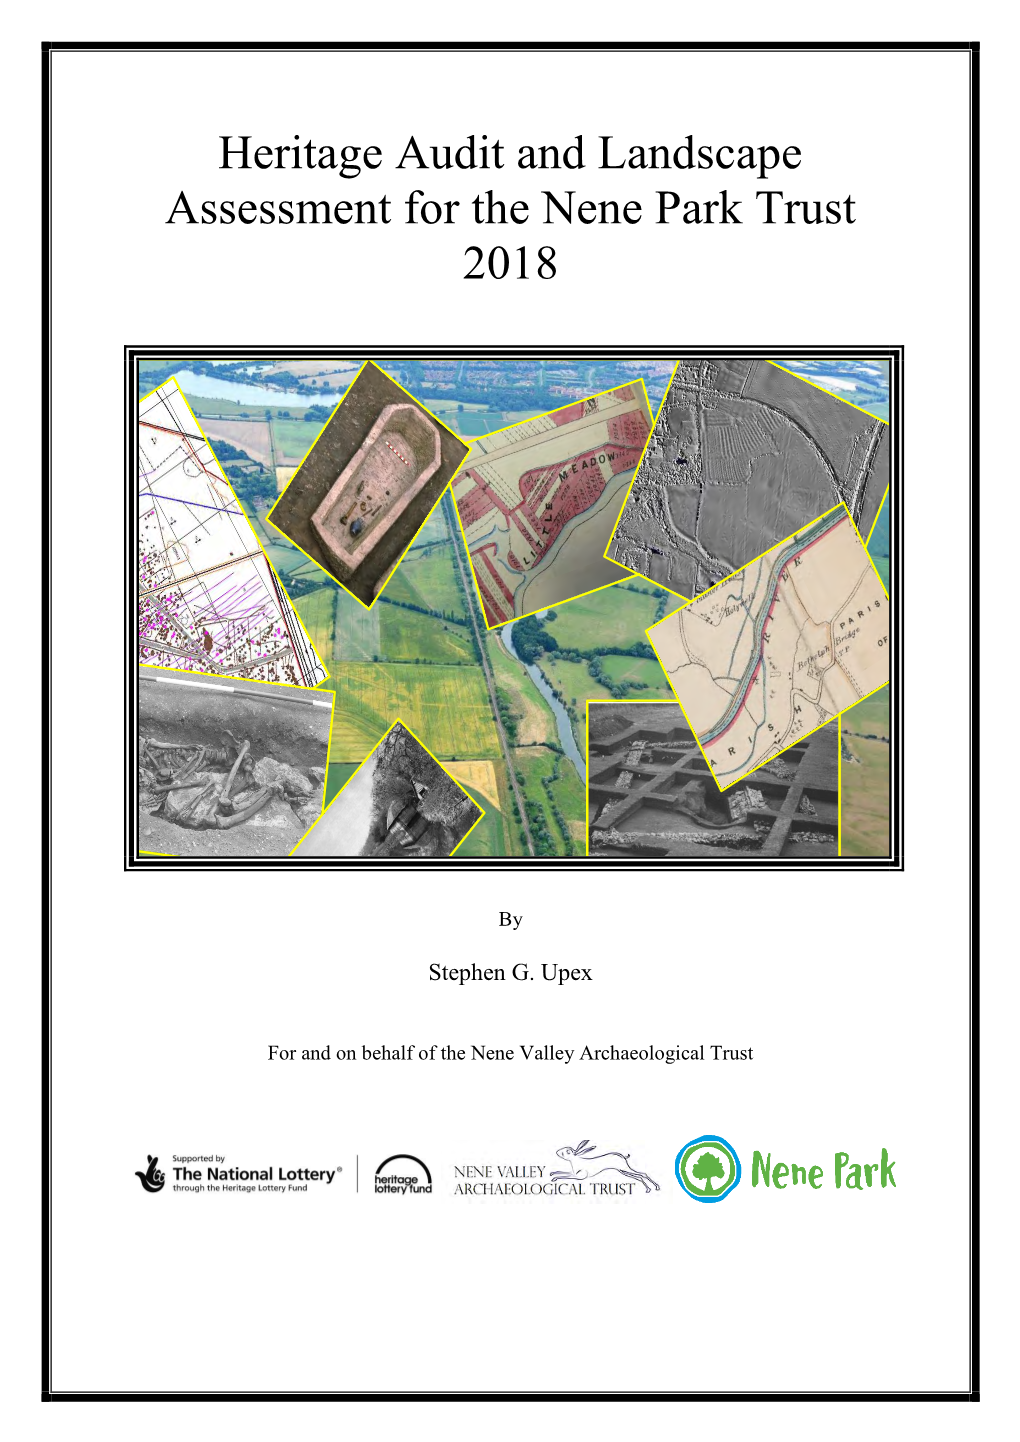 Heritage Audit and Landscape Assessment for the Nene Park Trust 2018